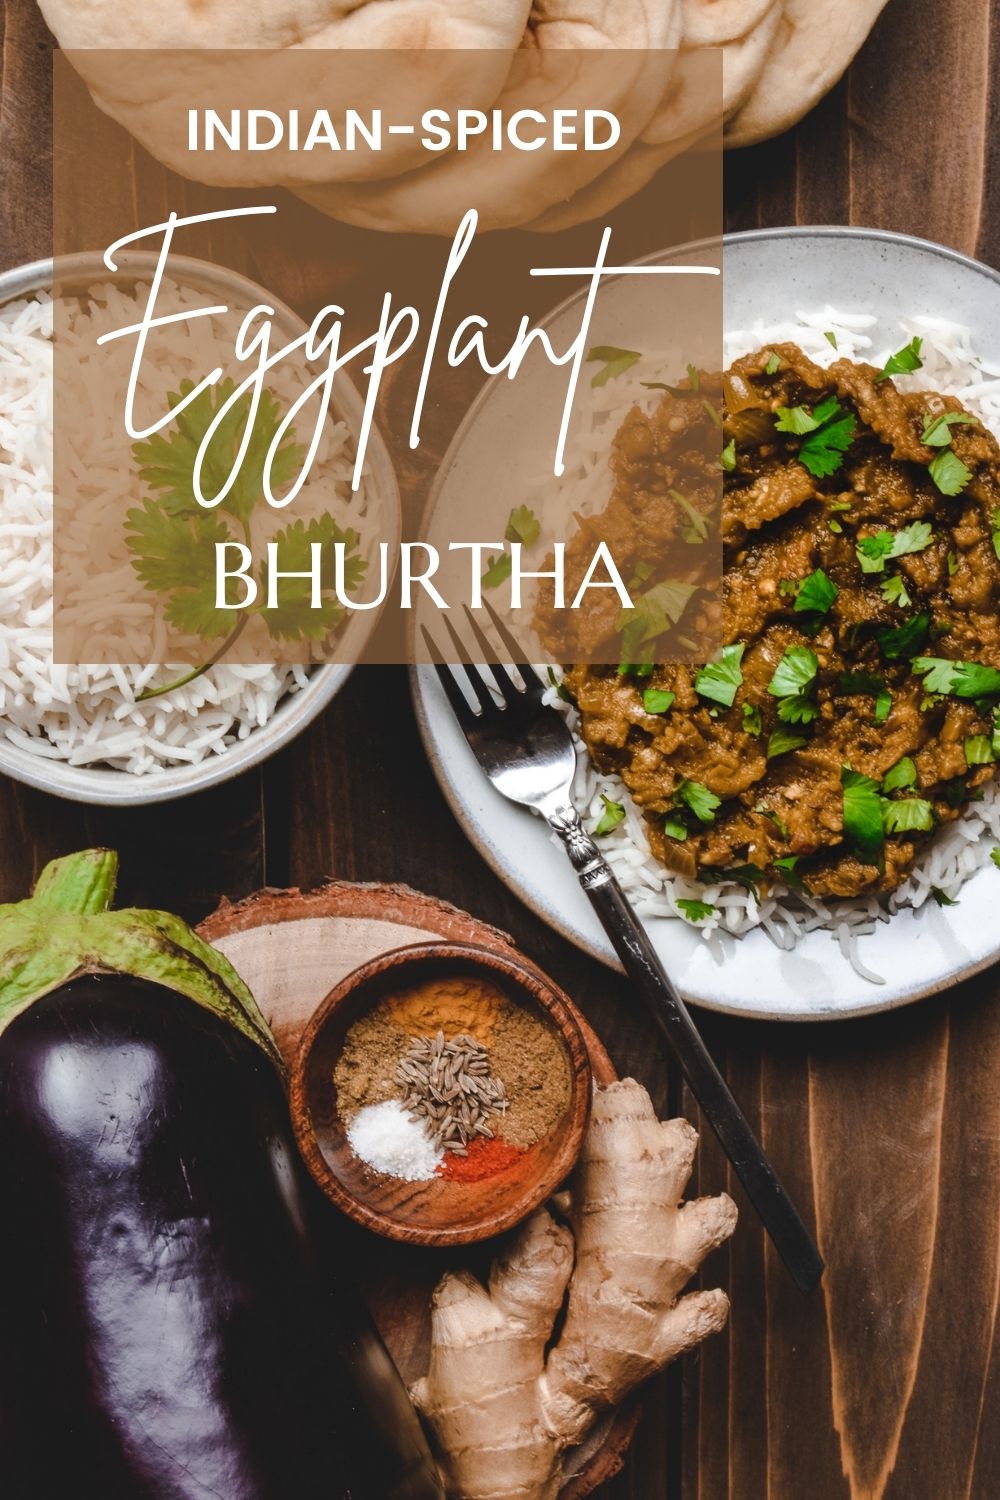 Indian-Spiced Eggplant Bhurtha